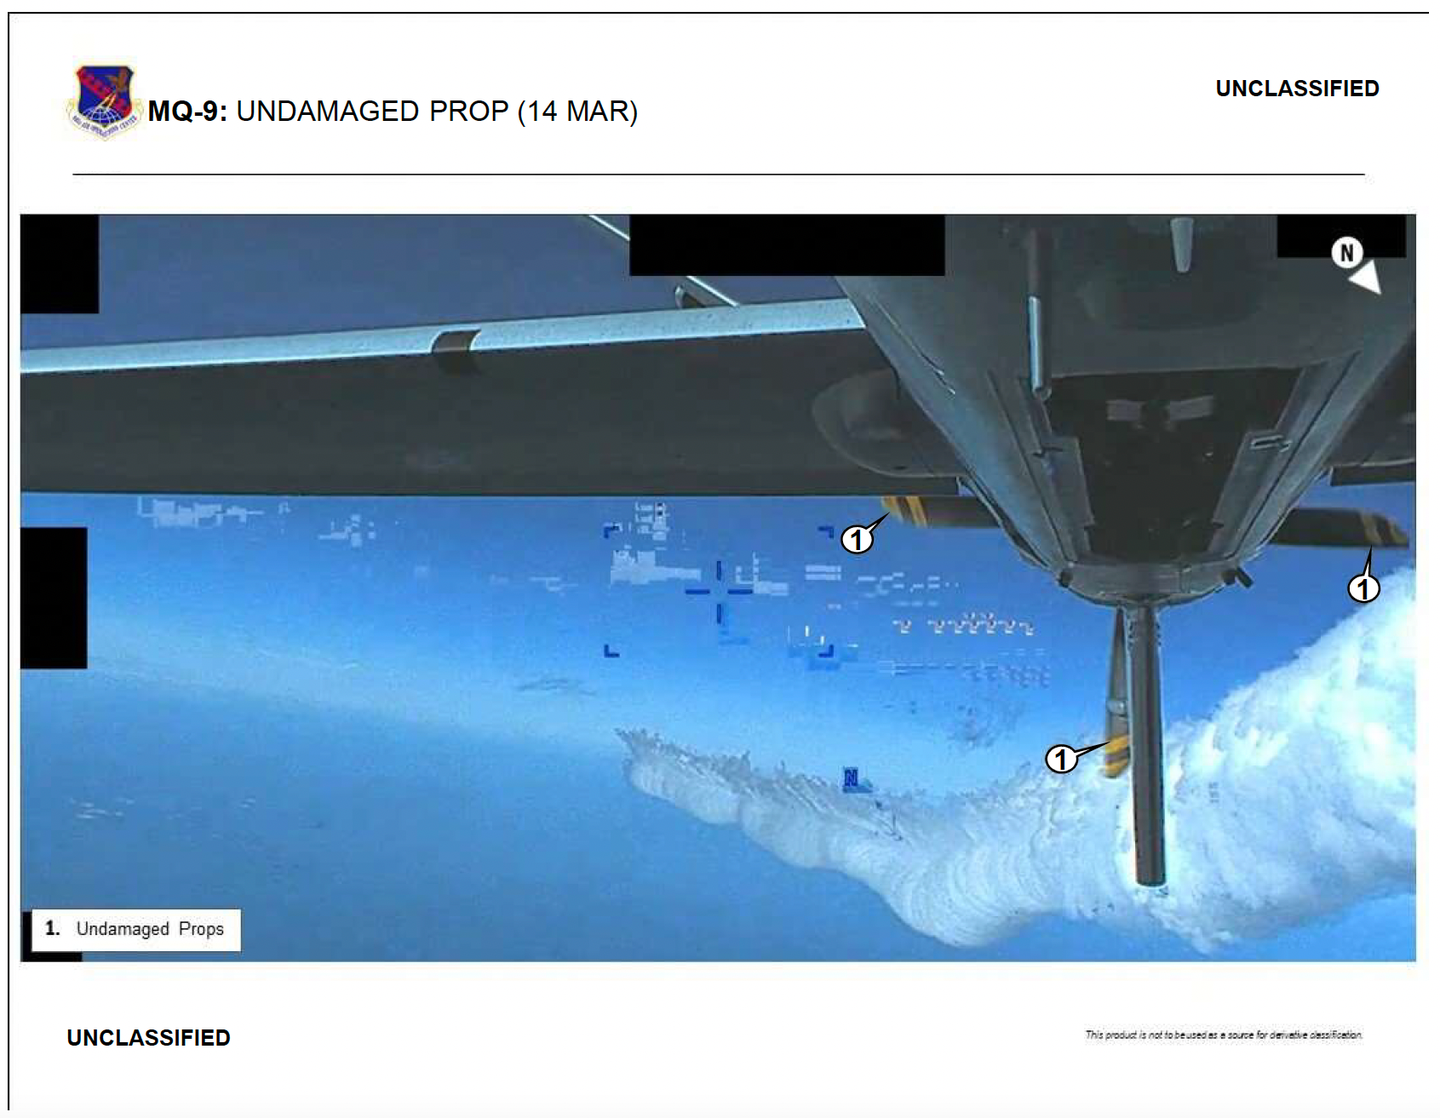 A view of the undamaged propeller, provided for comparison. <em>U.S. Department of Defense </em>